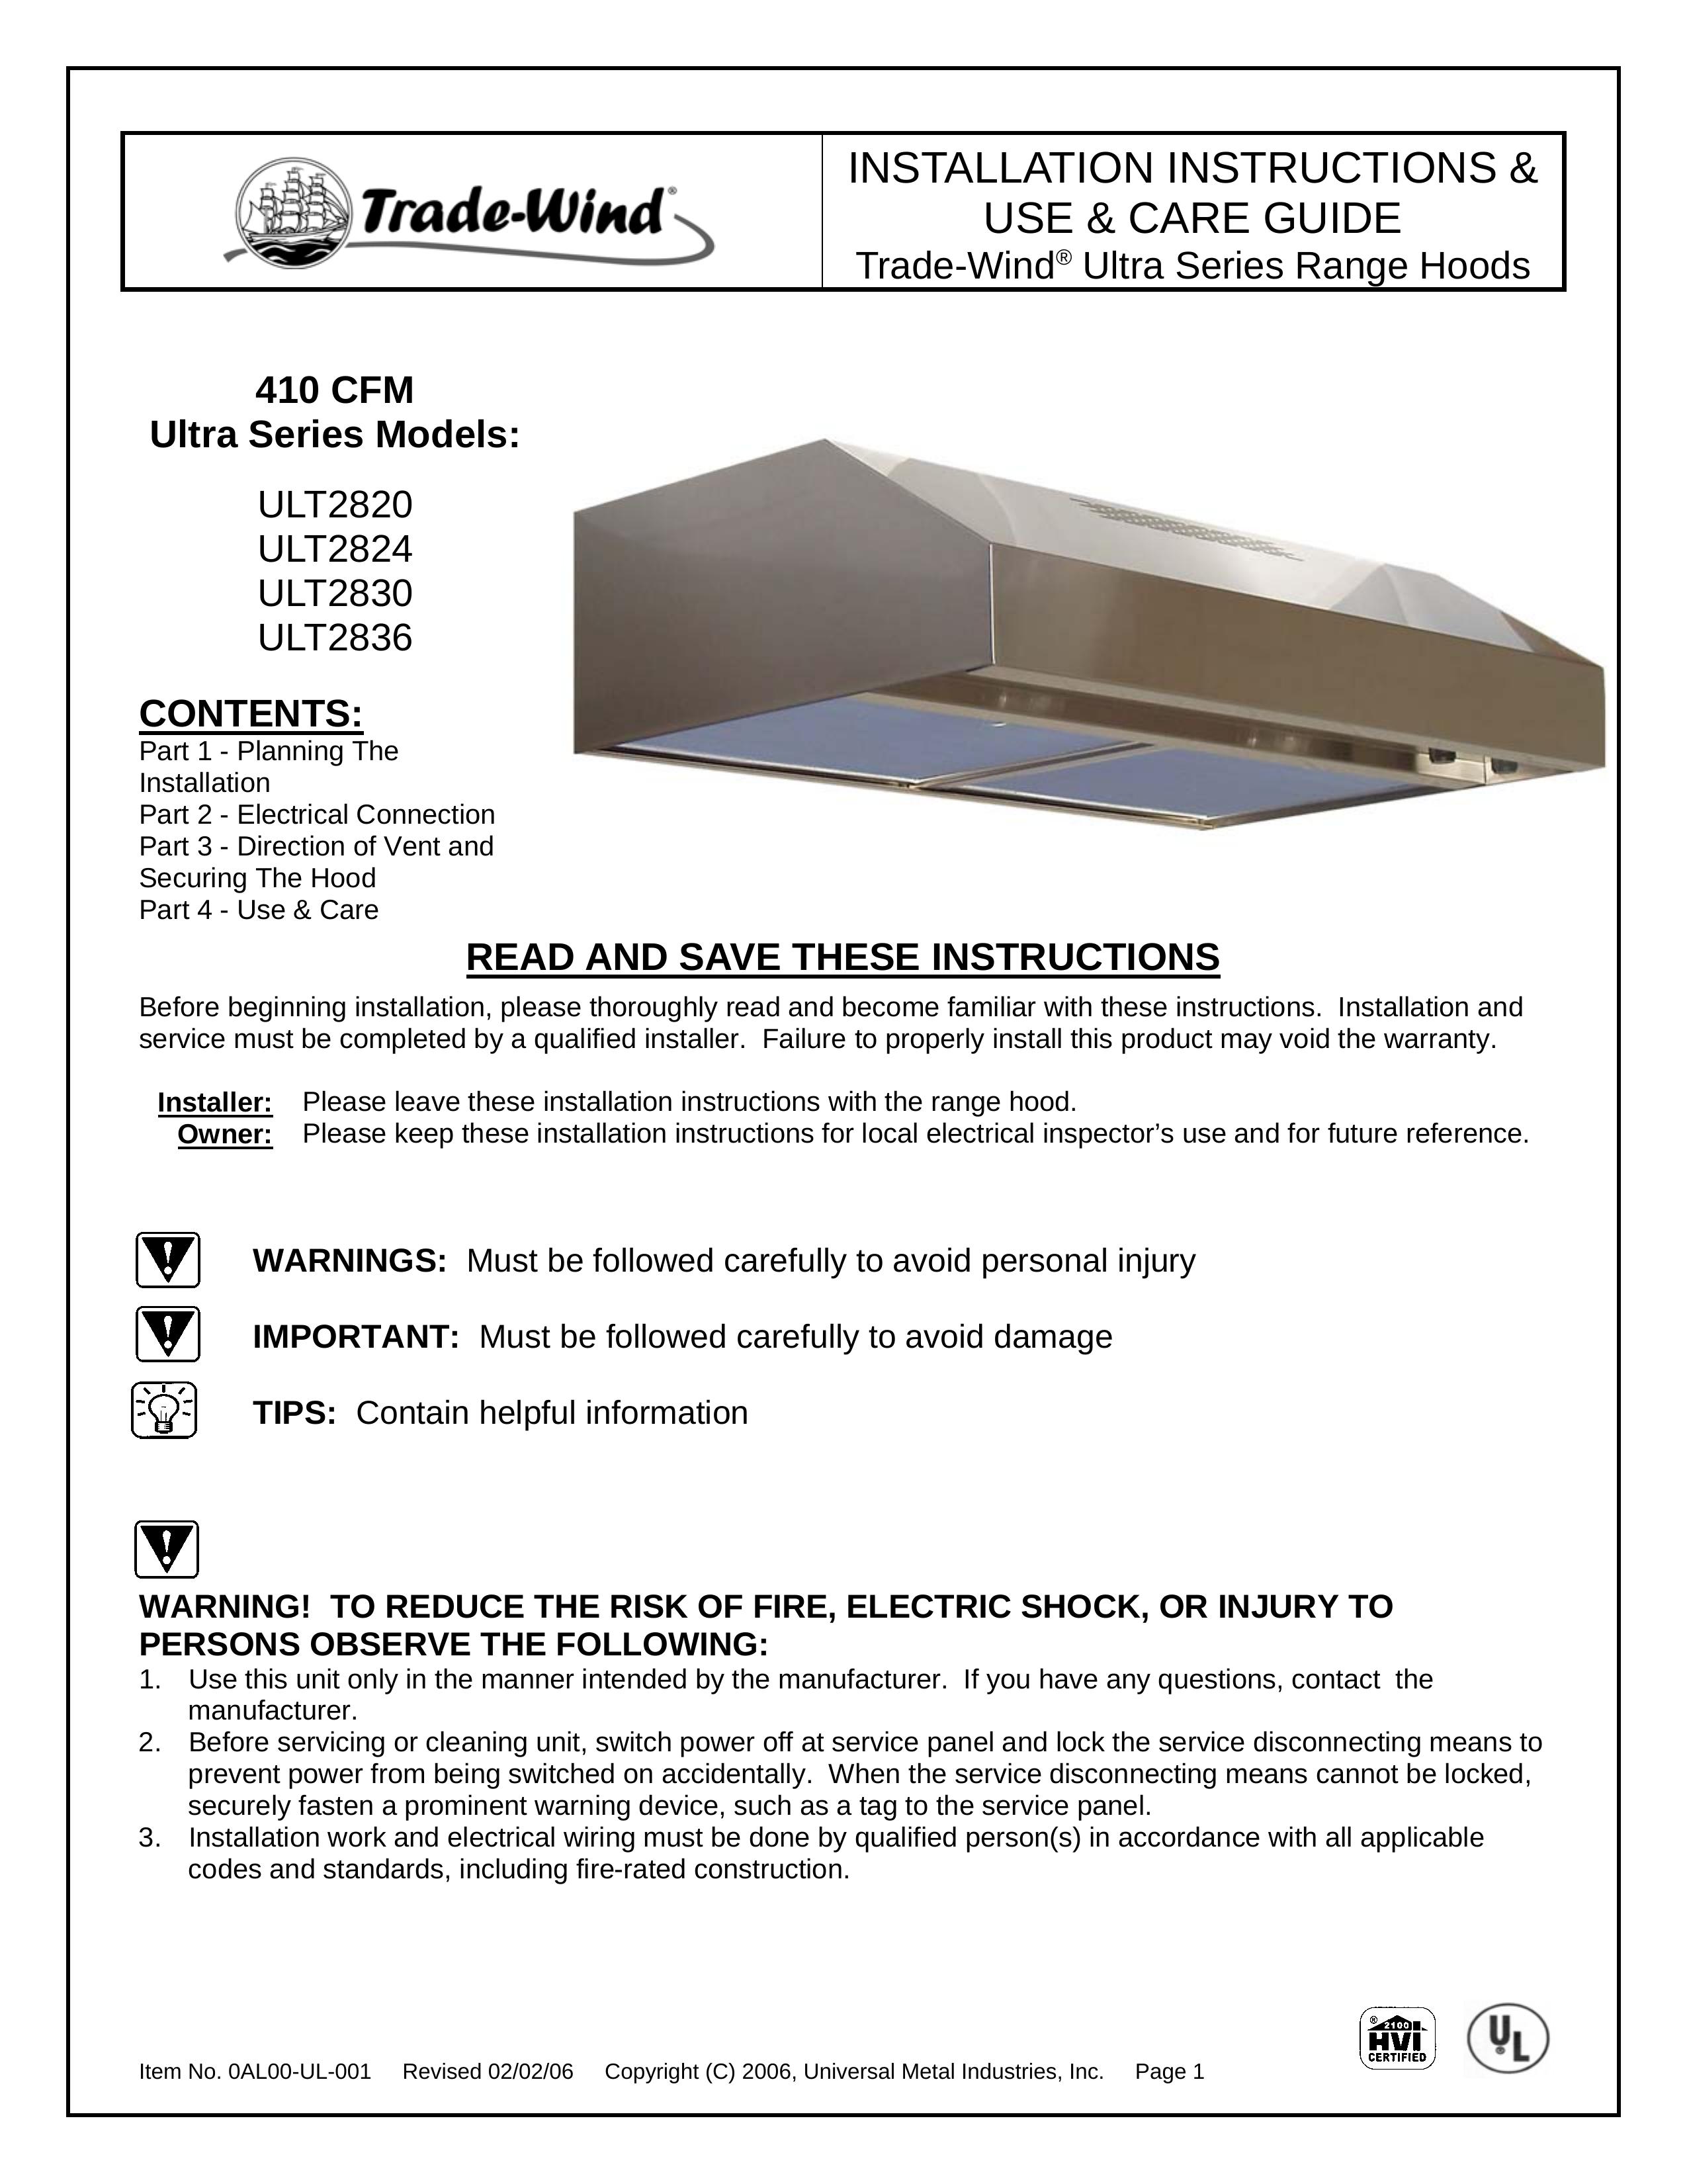 Universal Metal Industries ULT2830 Ventilation Hood User Manual